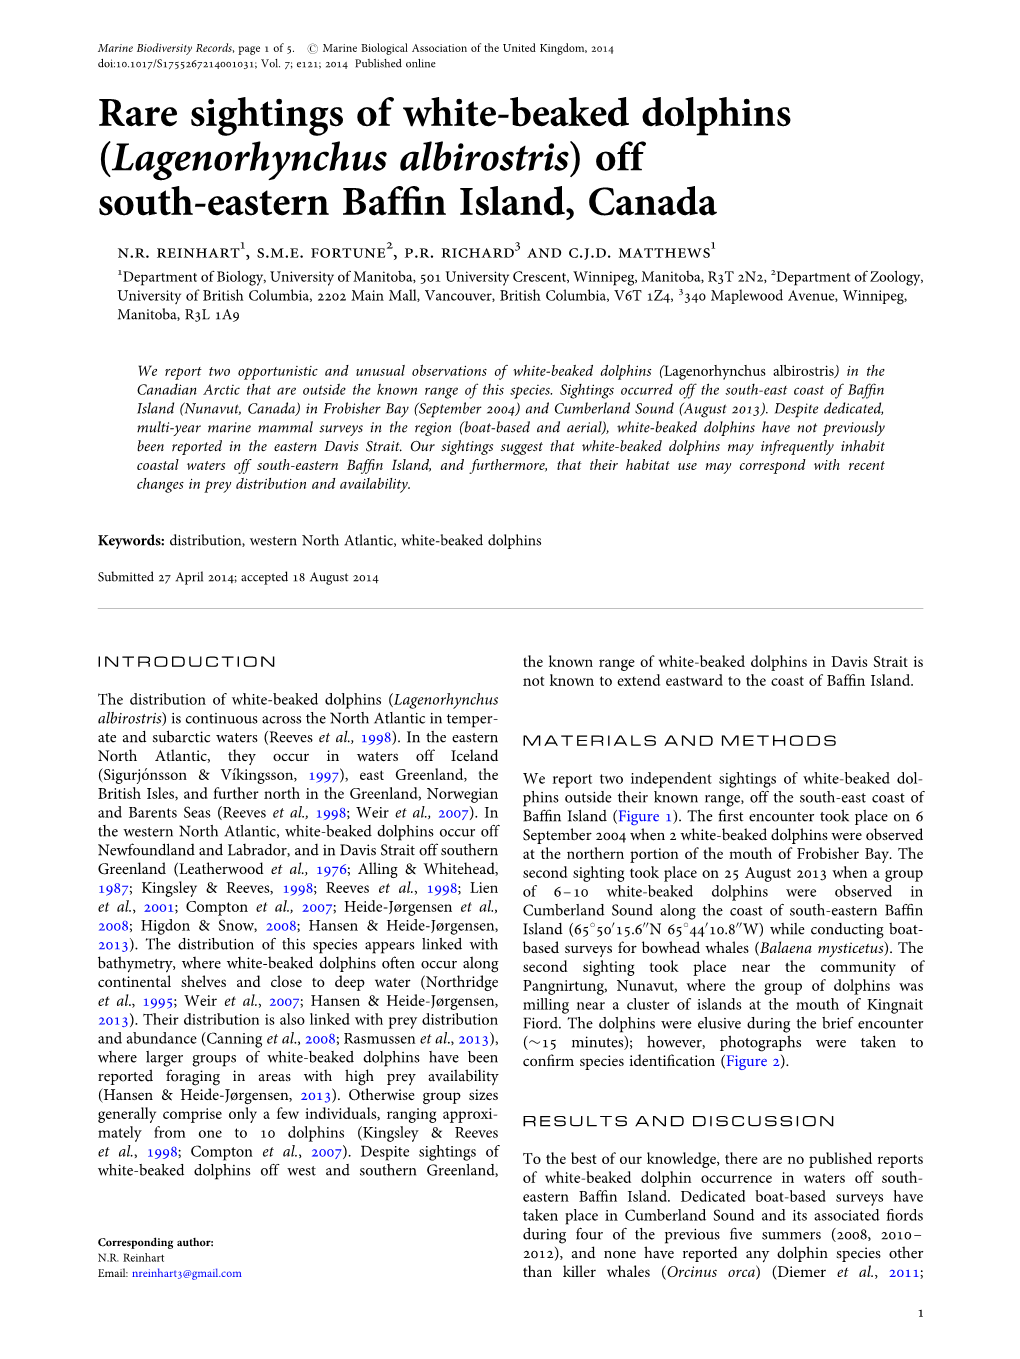 Rare Sightings of White-Beaked Dolphins (Lagenorhynchus Albirostris) Off South-Eastern Bafﬁn Island, Canada N.R